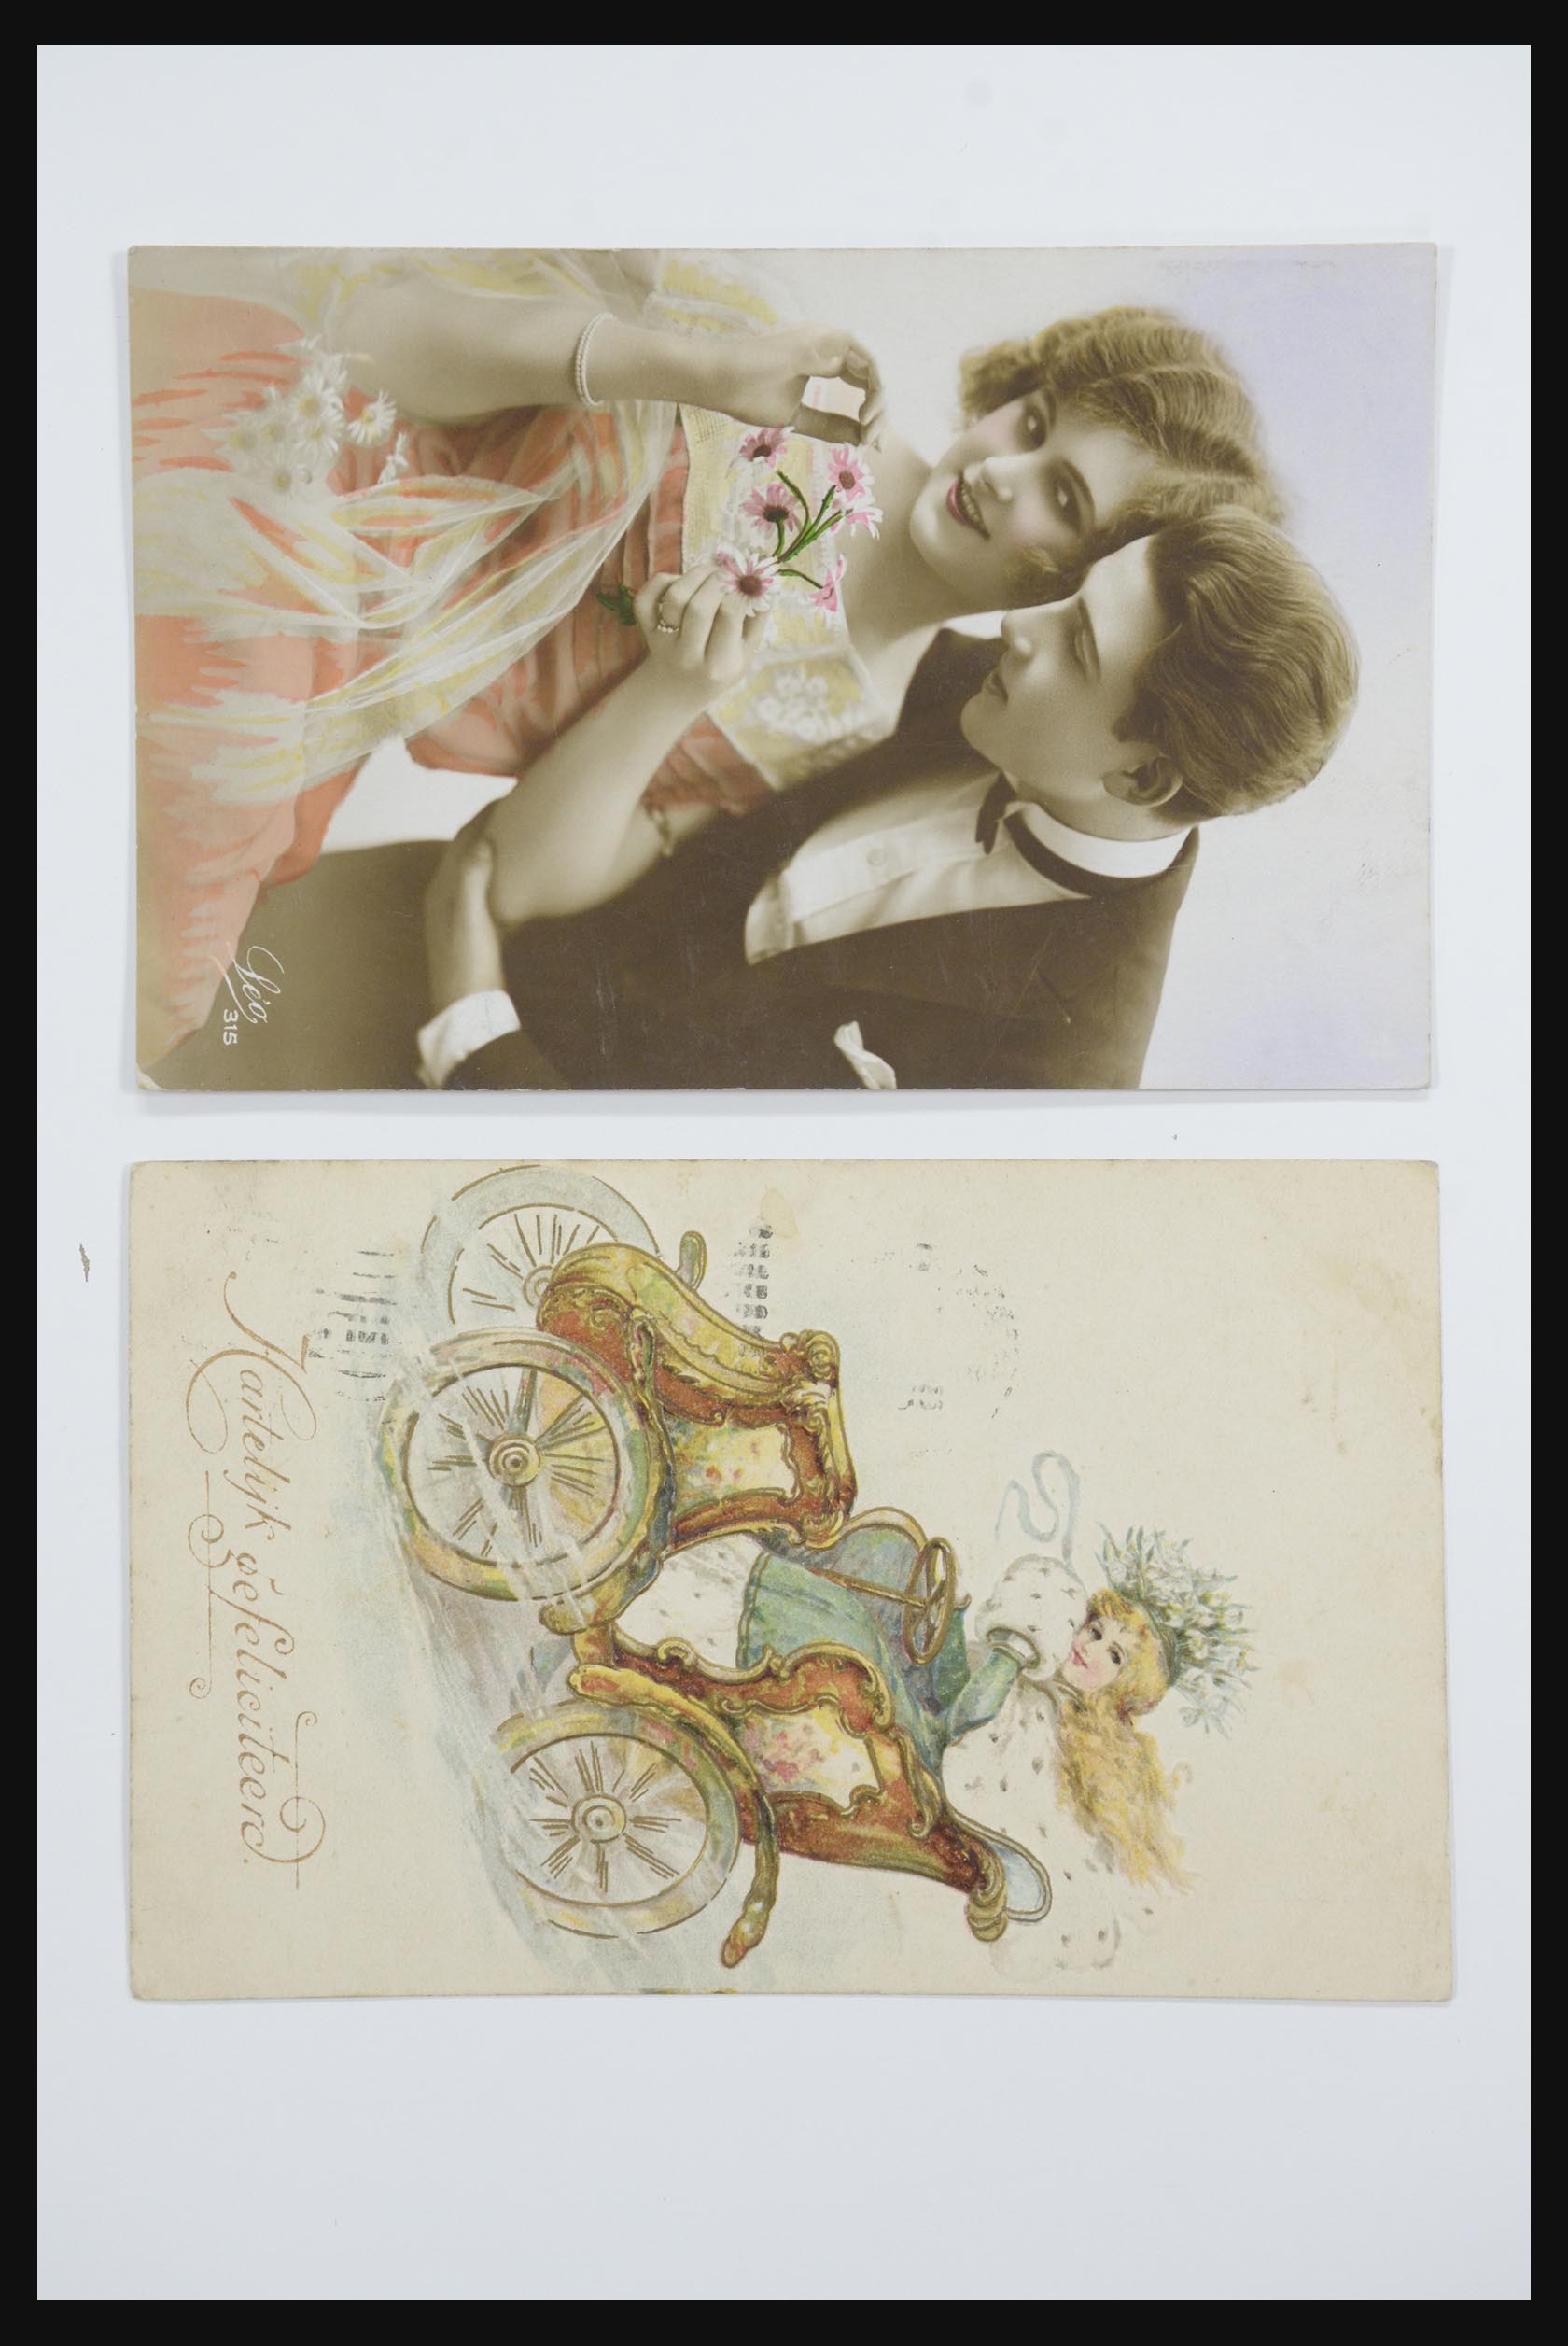 31668 005 - 31668 Netherlands picture postcards 1905-1935.